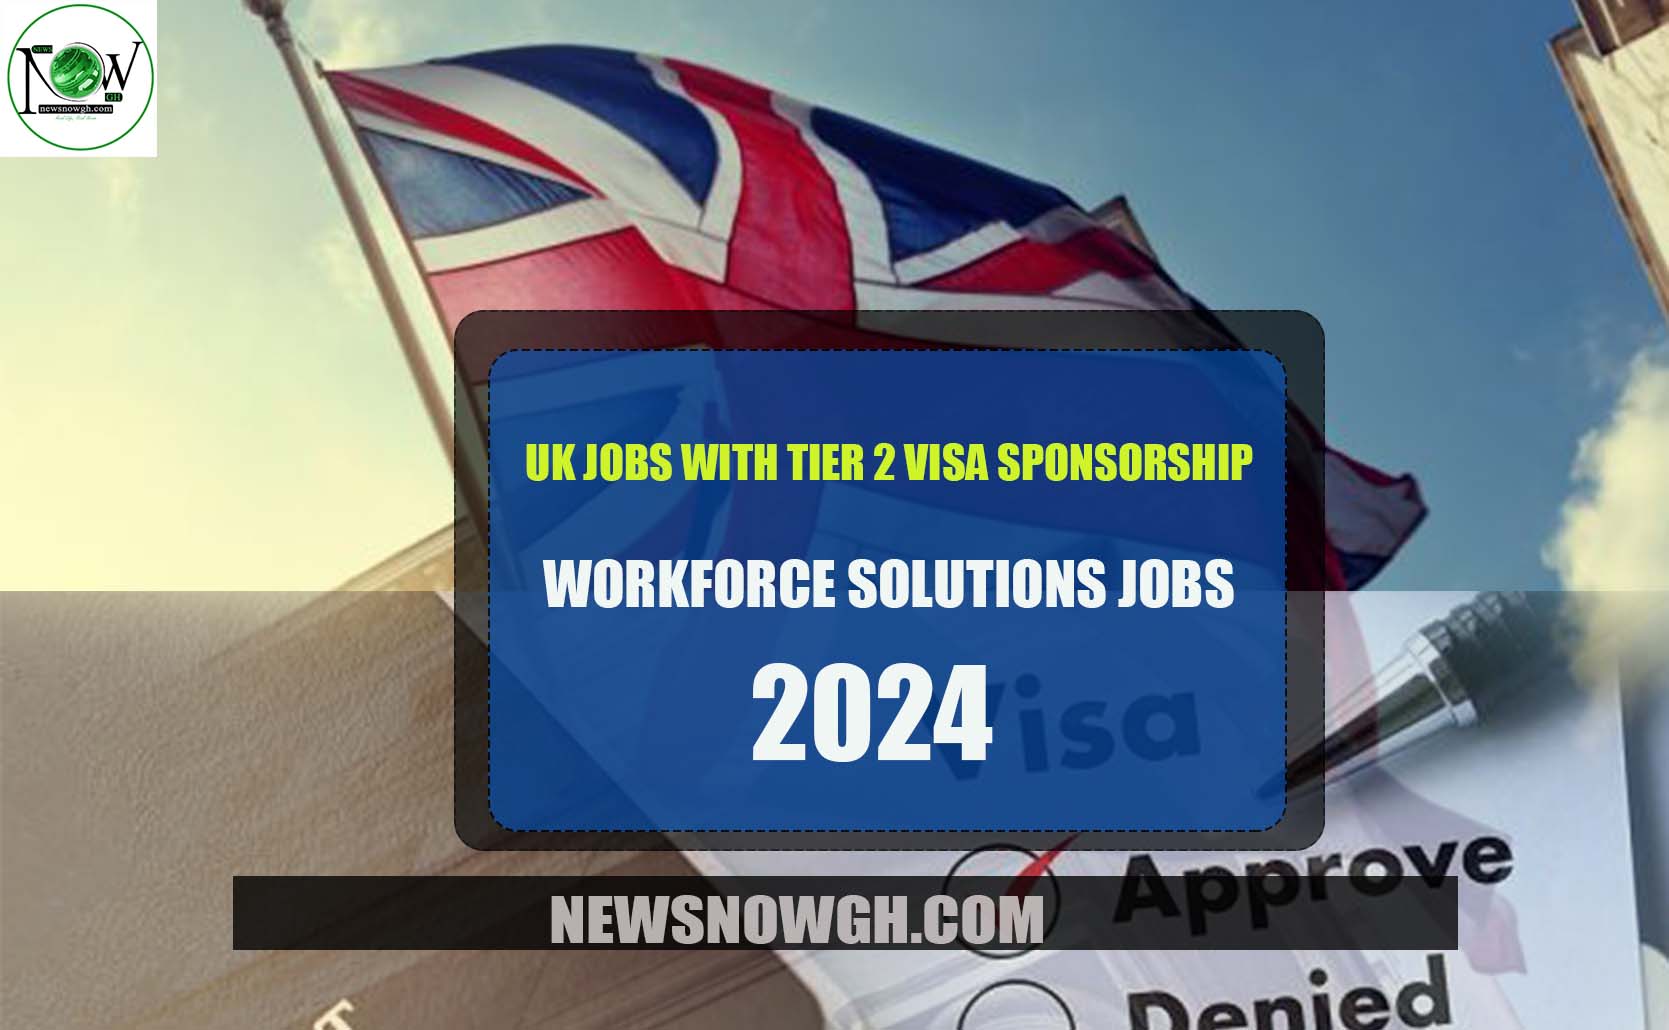 UK Jobs with Tier 2 Visa Sponsorship 2024 Workforce Solutions